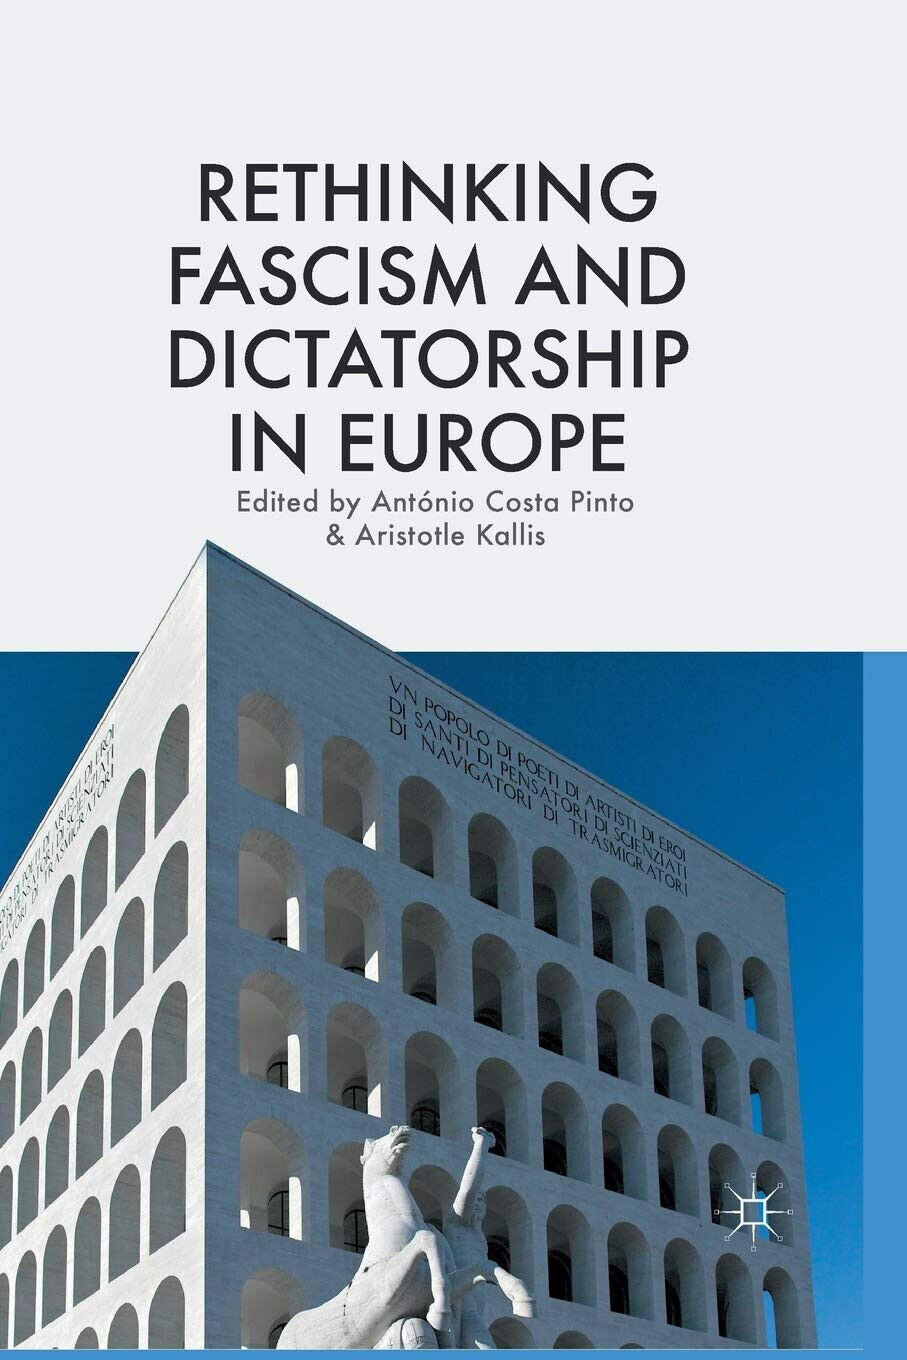 Rethinking Fascism and Dictatorship in Europe - Ant?nio Costa Pinto - 2014